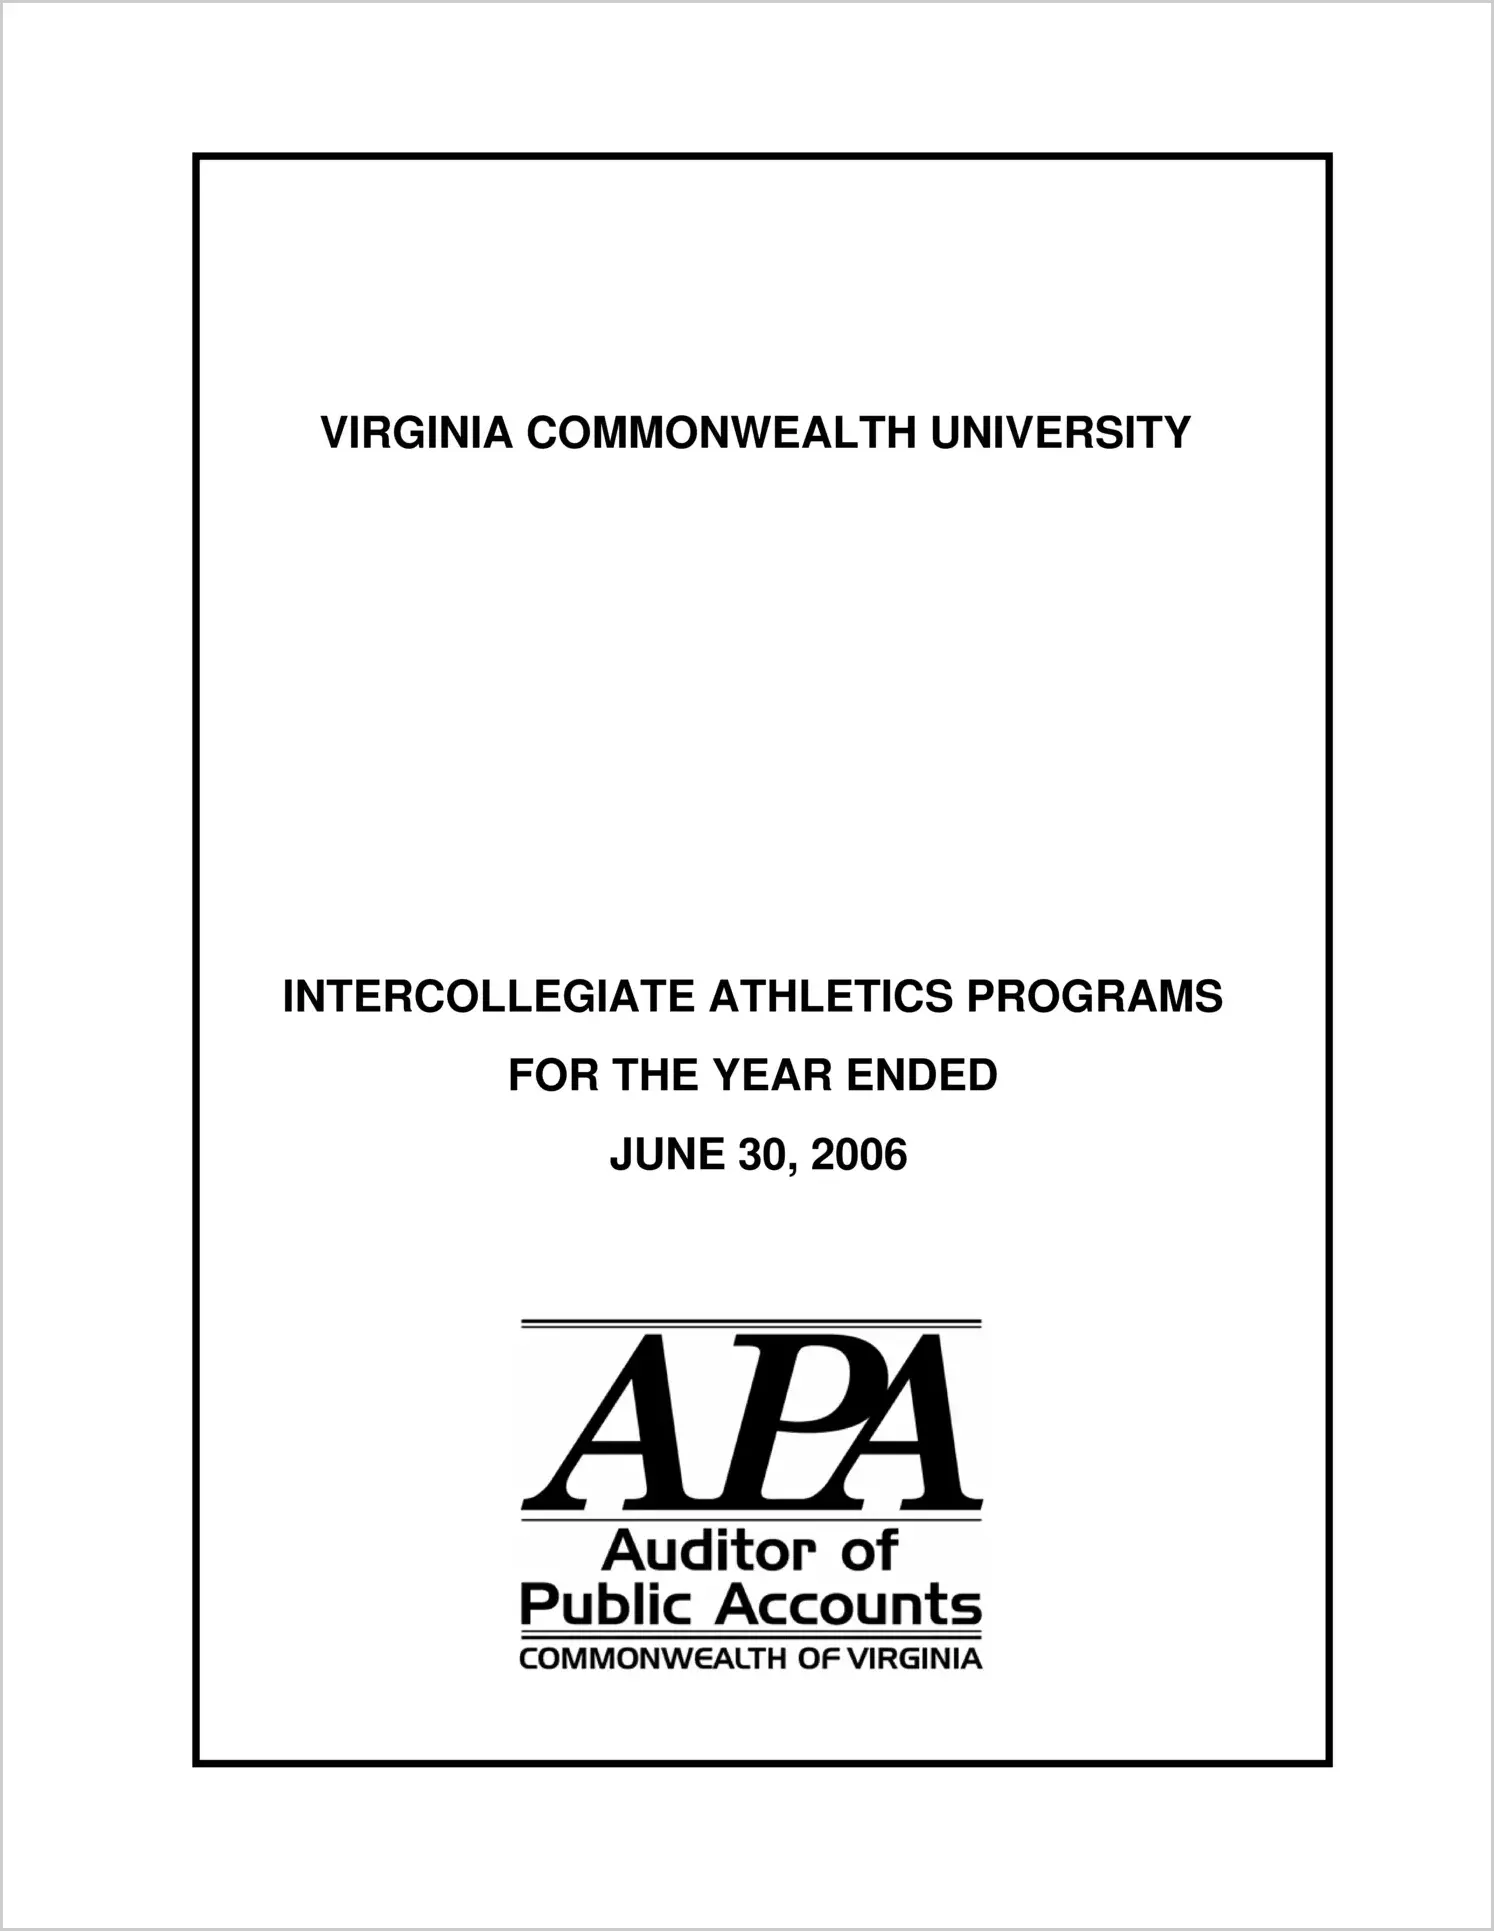 Virginia Commonwealth University Intercollegiate Athletics Programs for the year ended June 30, 2006